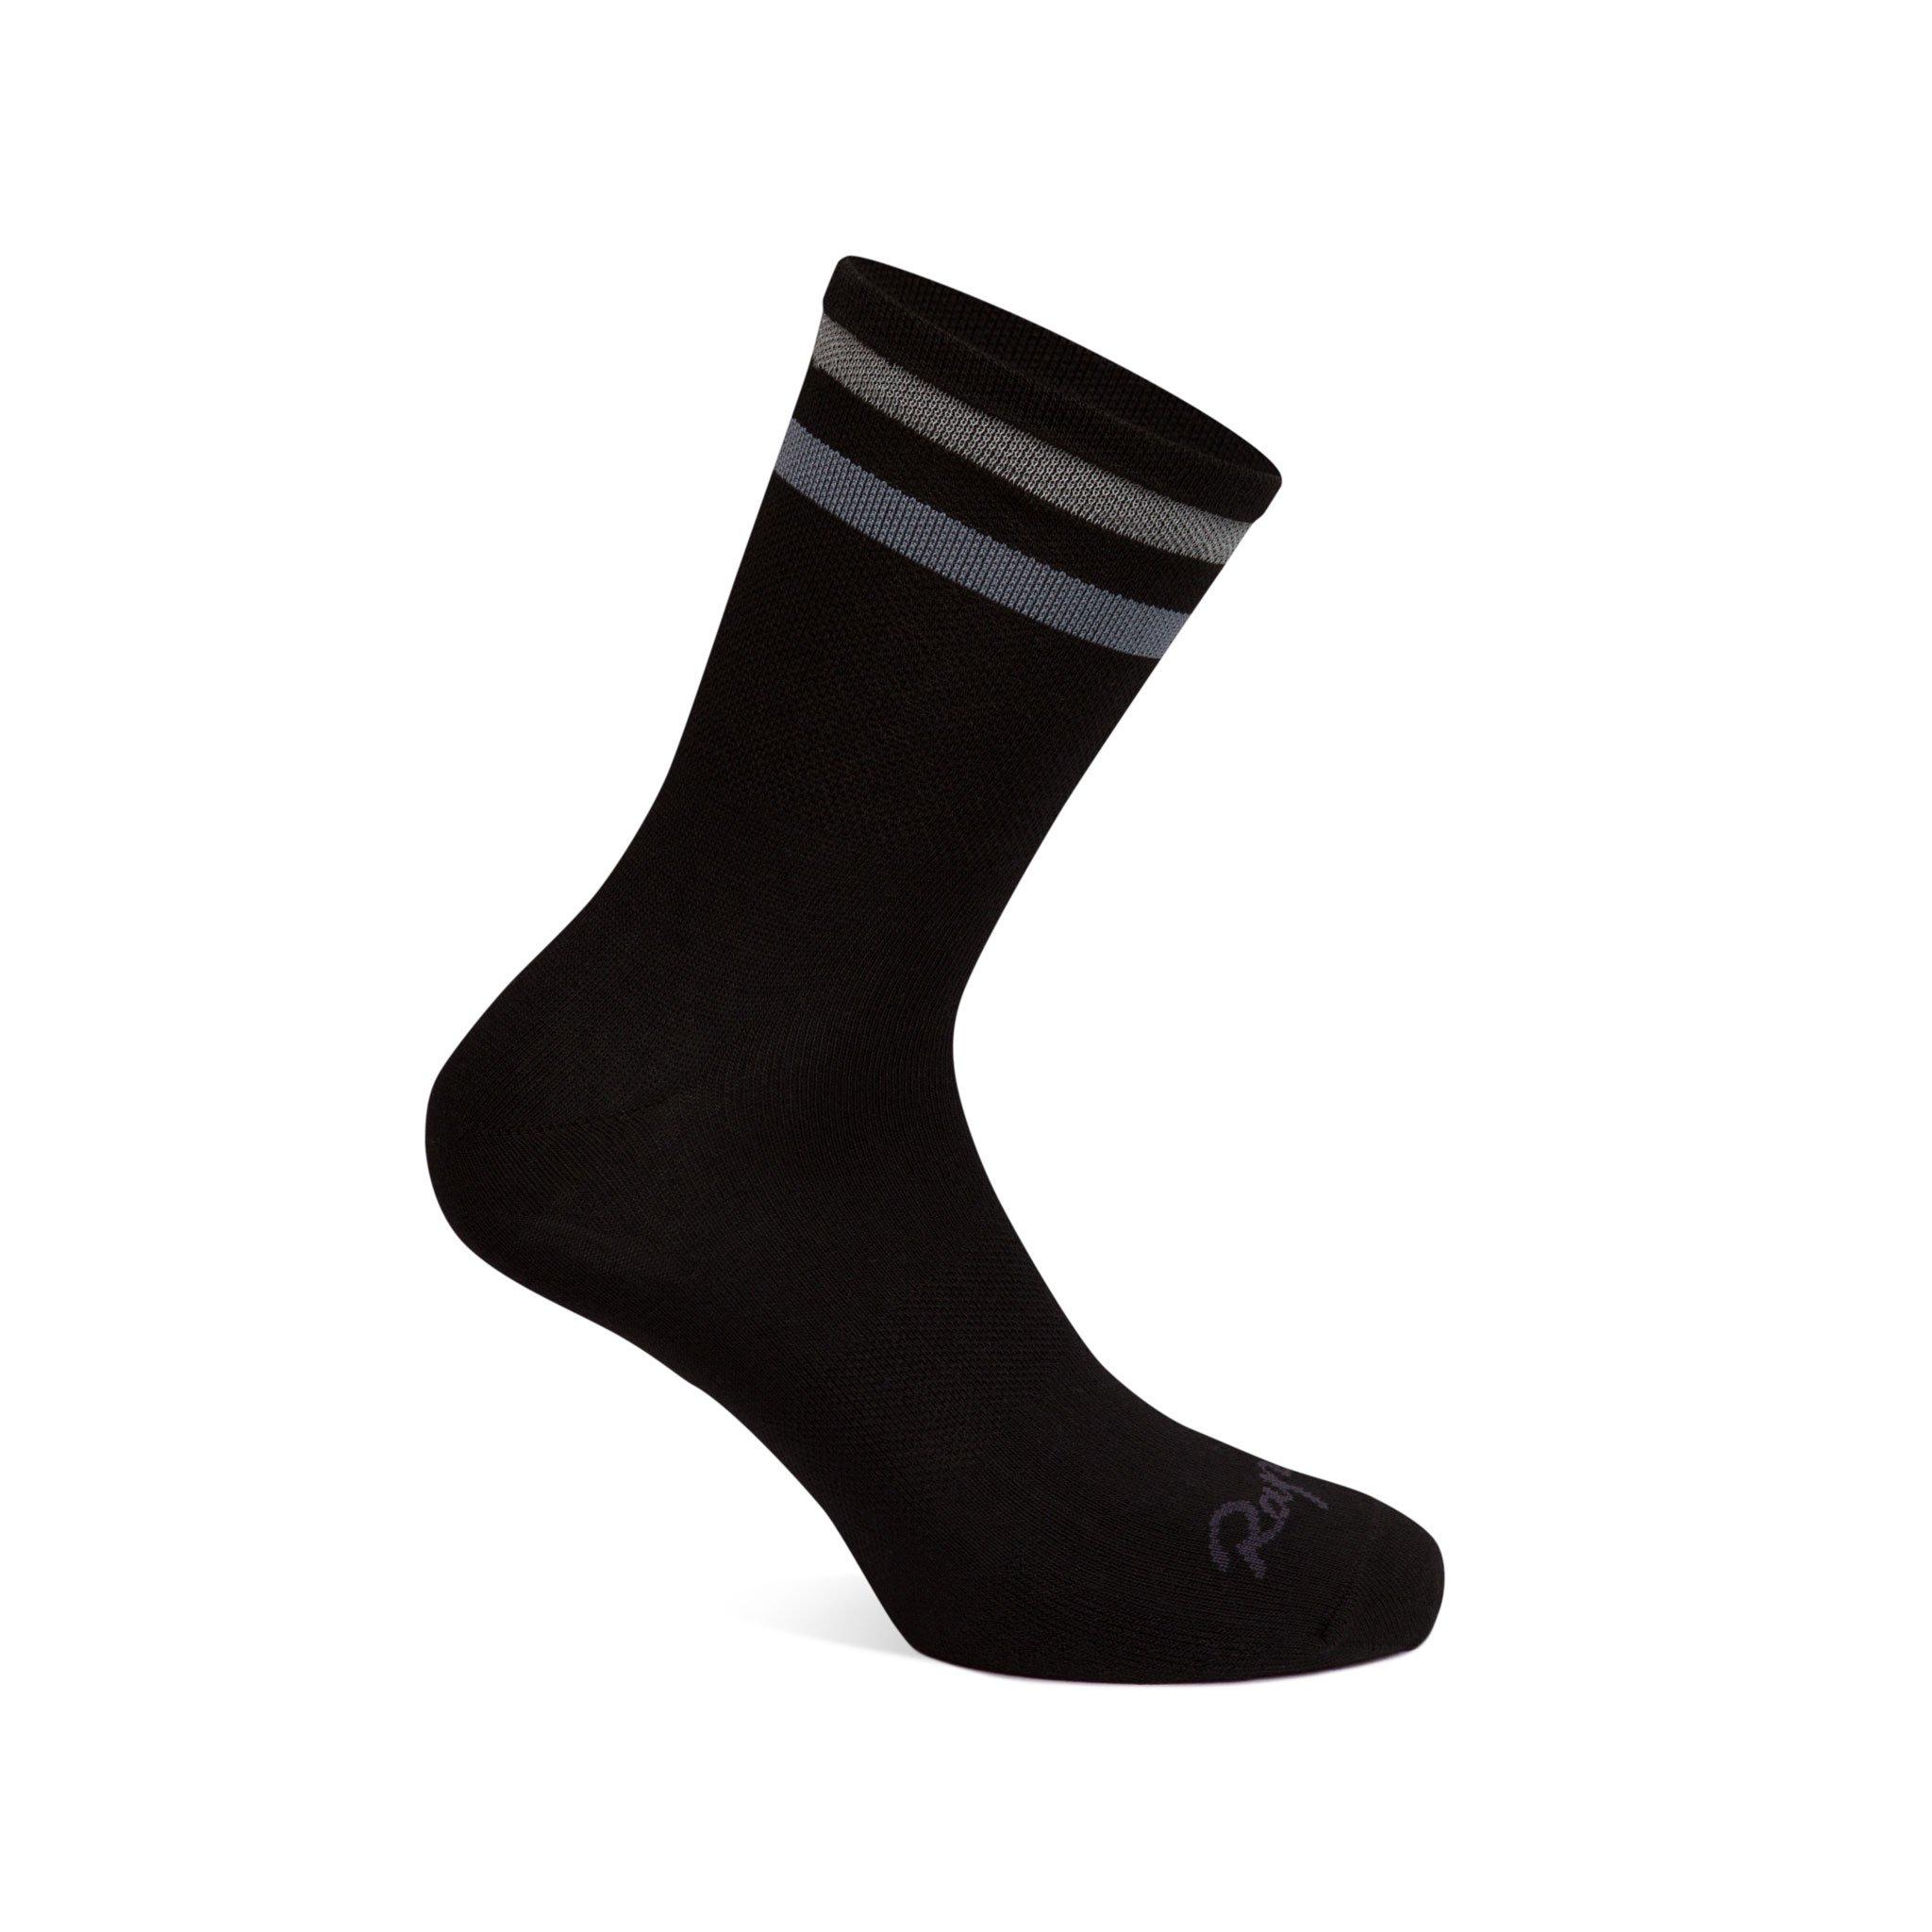 Paramount Active Athletic Socks